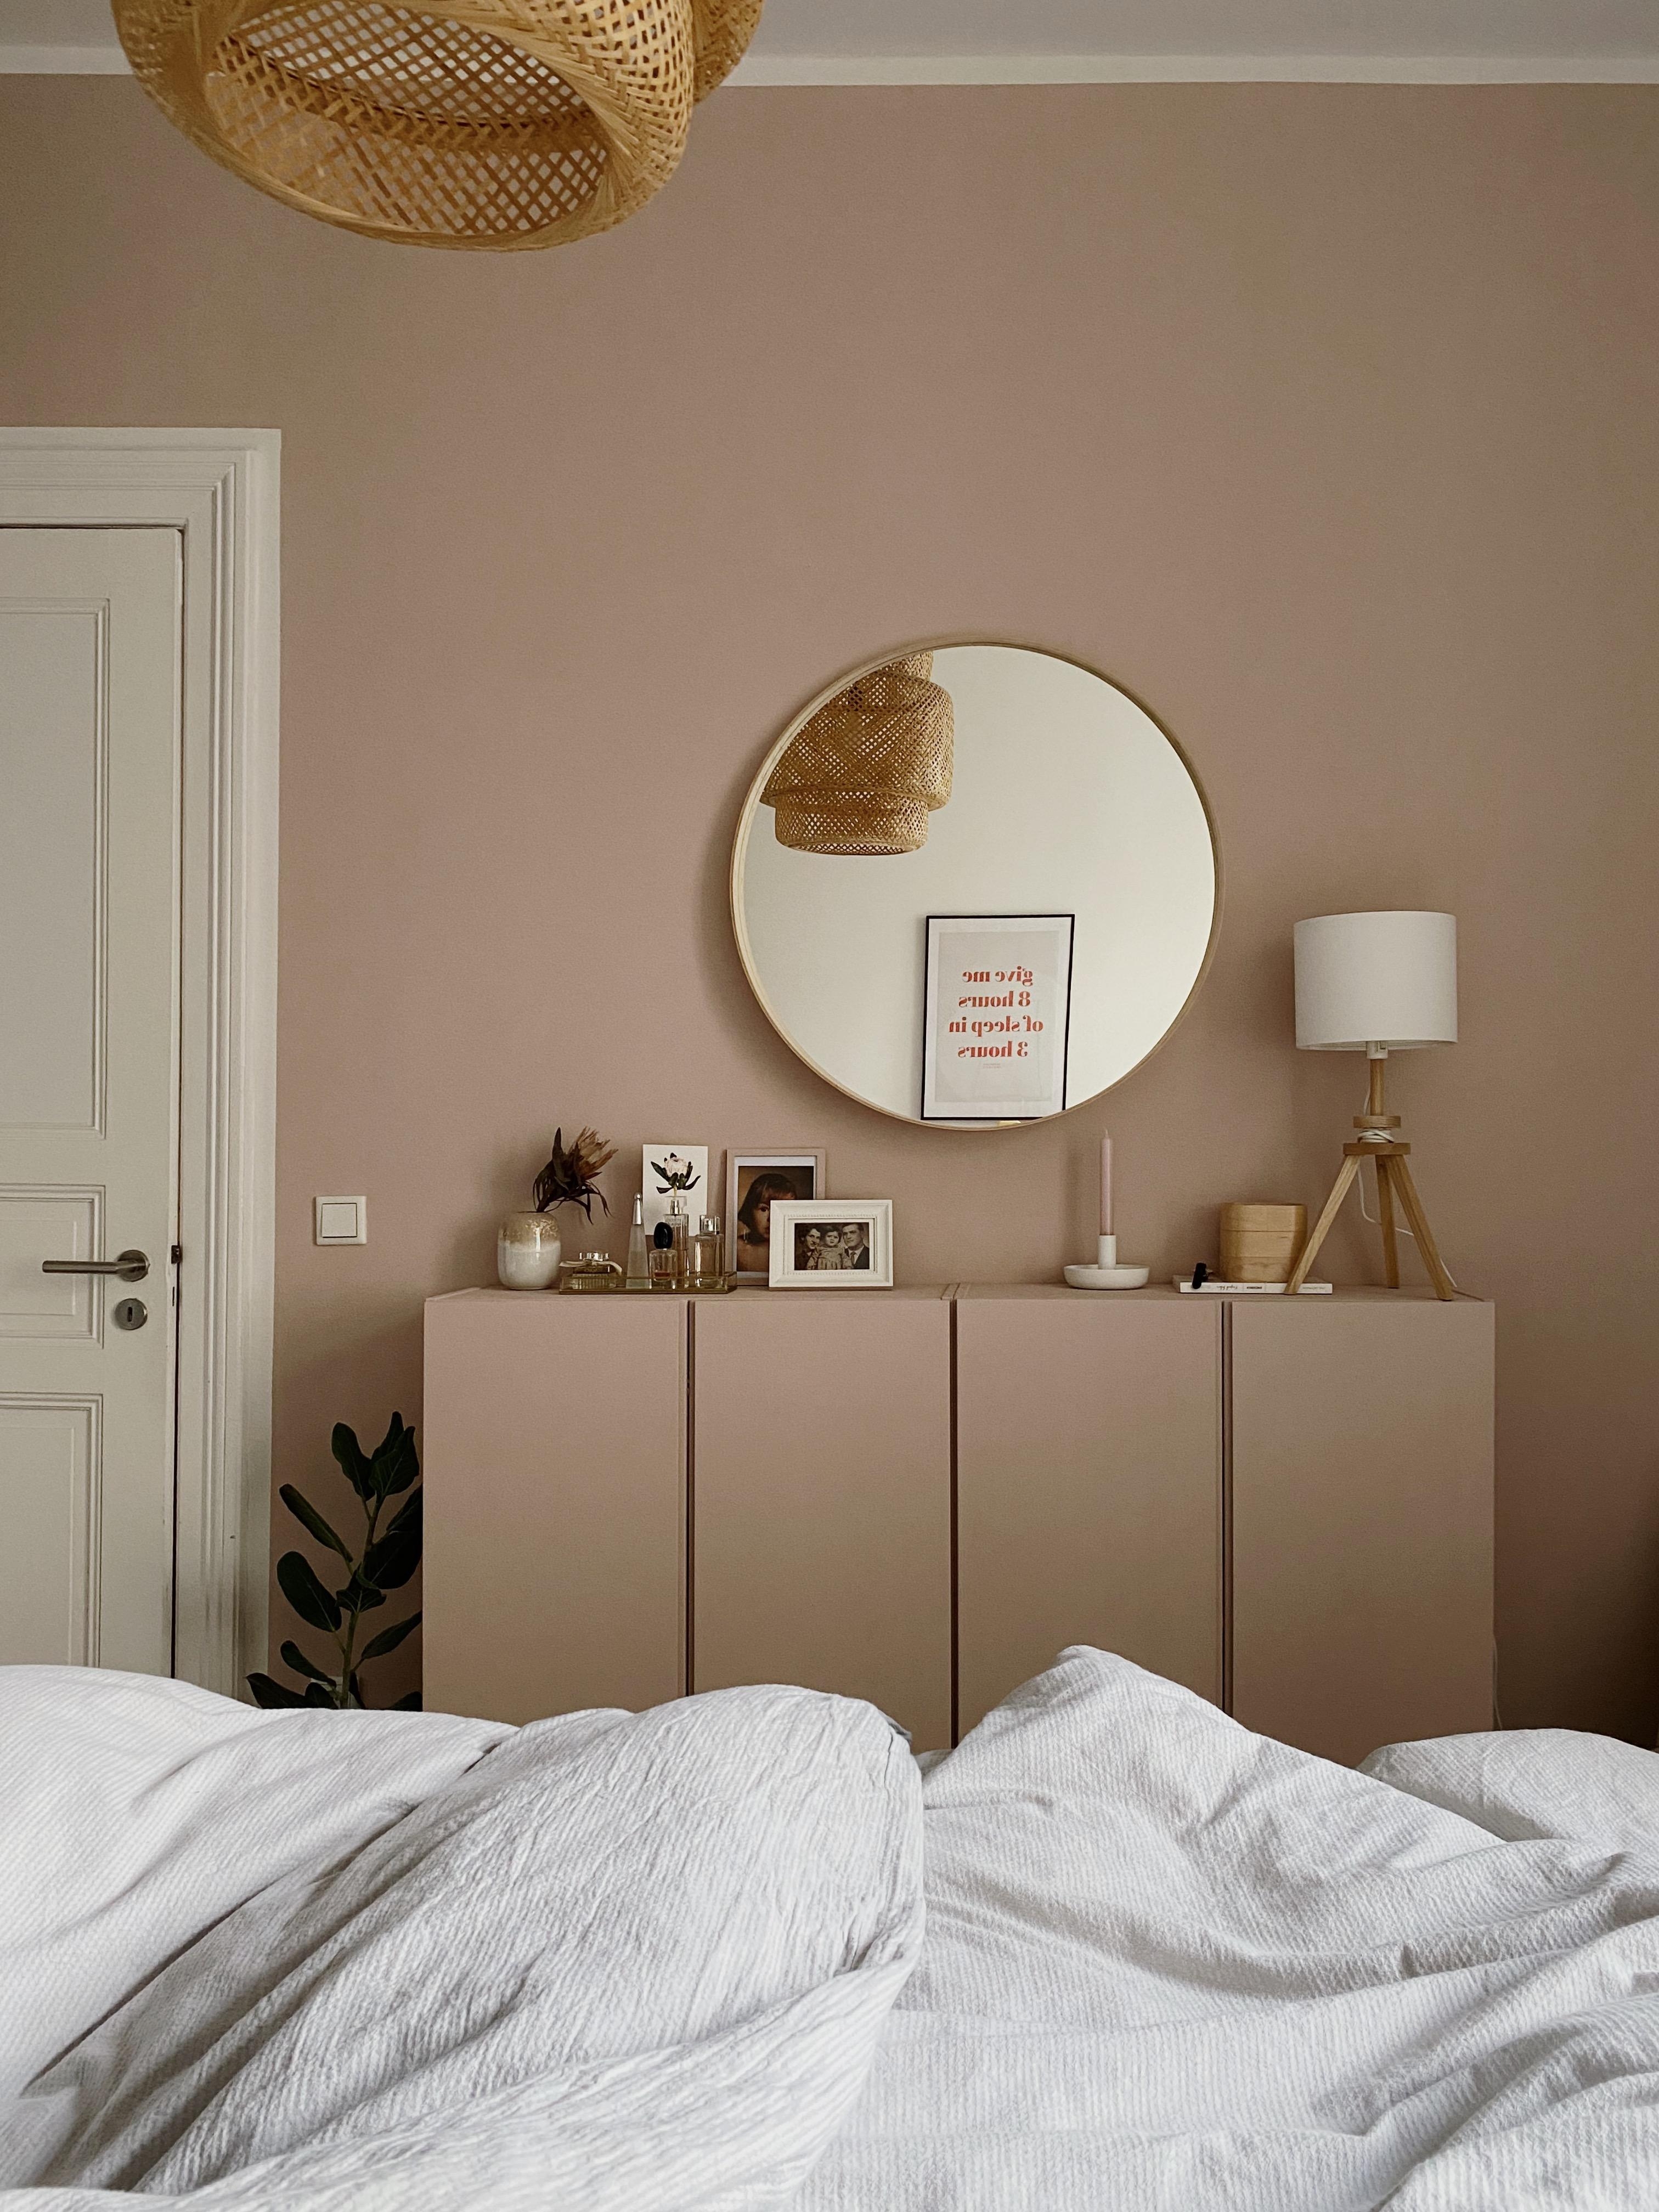 It‘s a match #interior #bedroom #schoenerwohnenfarbe #wandfarbe #touchofrose #couchliebt #couchstyle